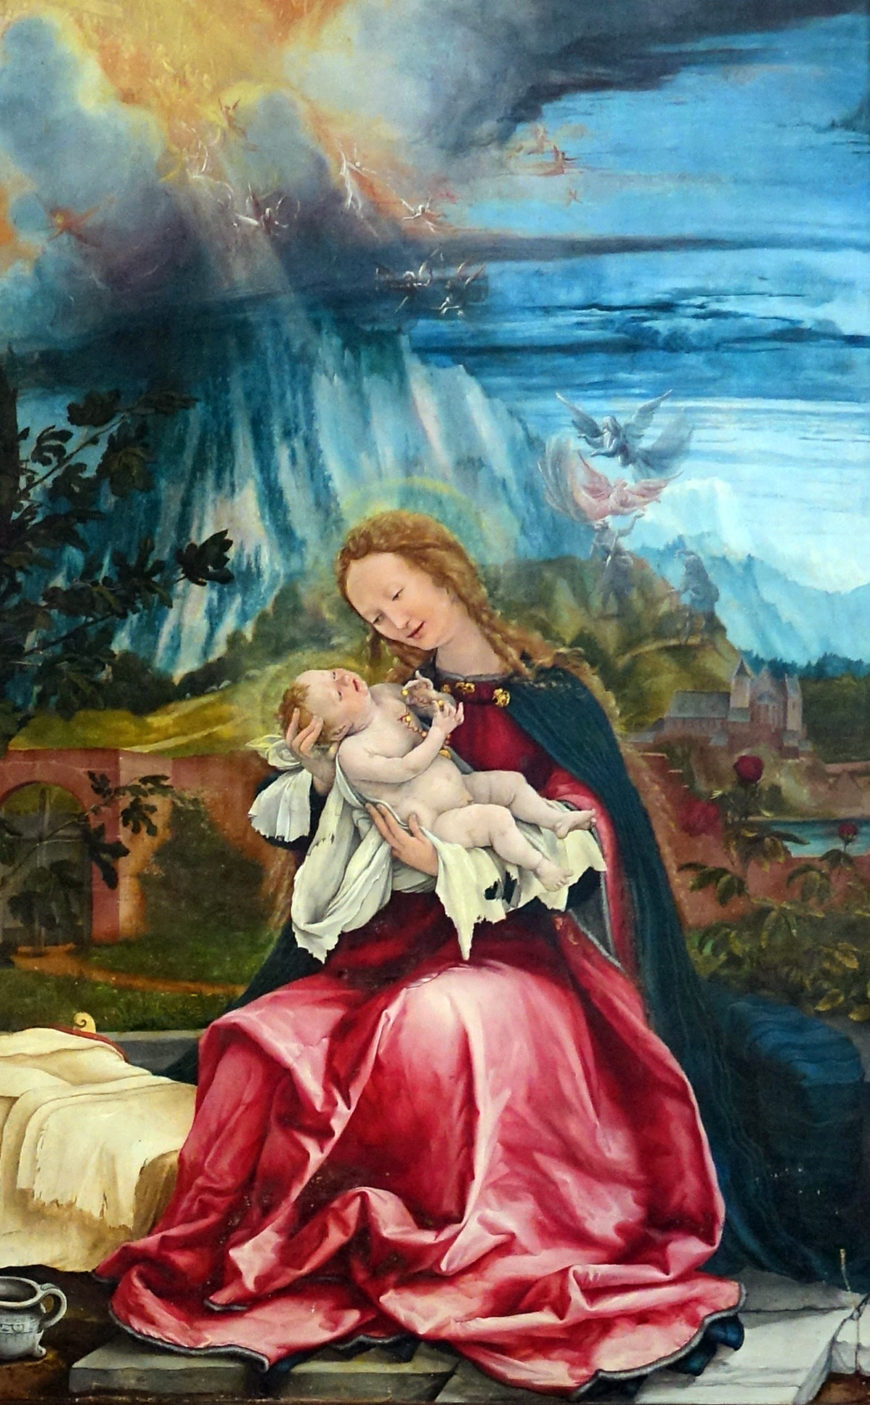 Virgin and child (detail), Matthias Grünewald, Isenheim Altarpiece, 1510–15 (photo: Gzen92, CC BY-SA 4.0)